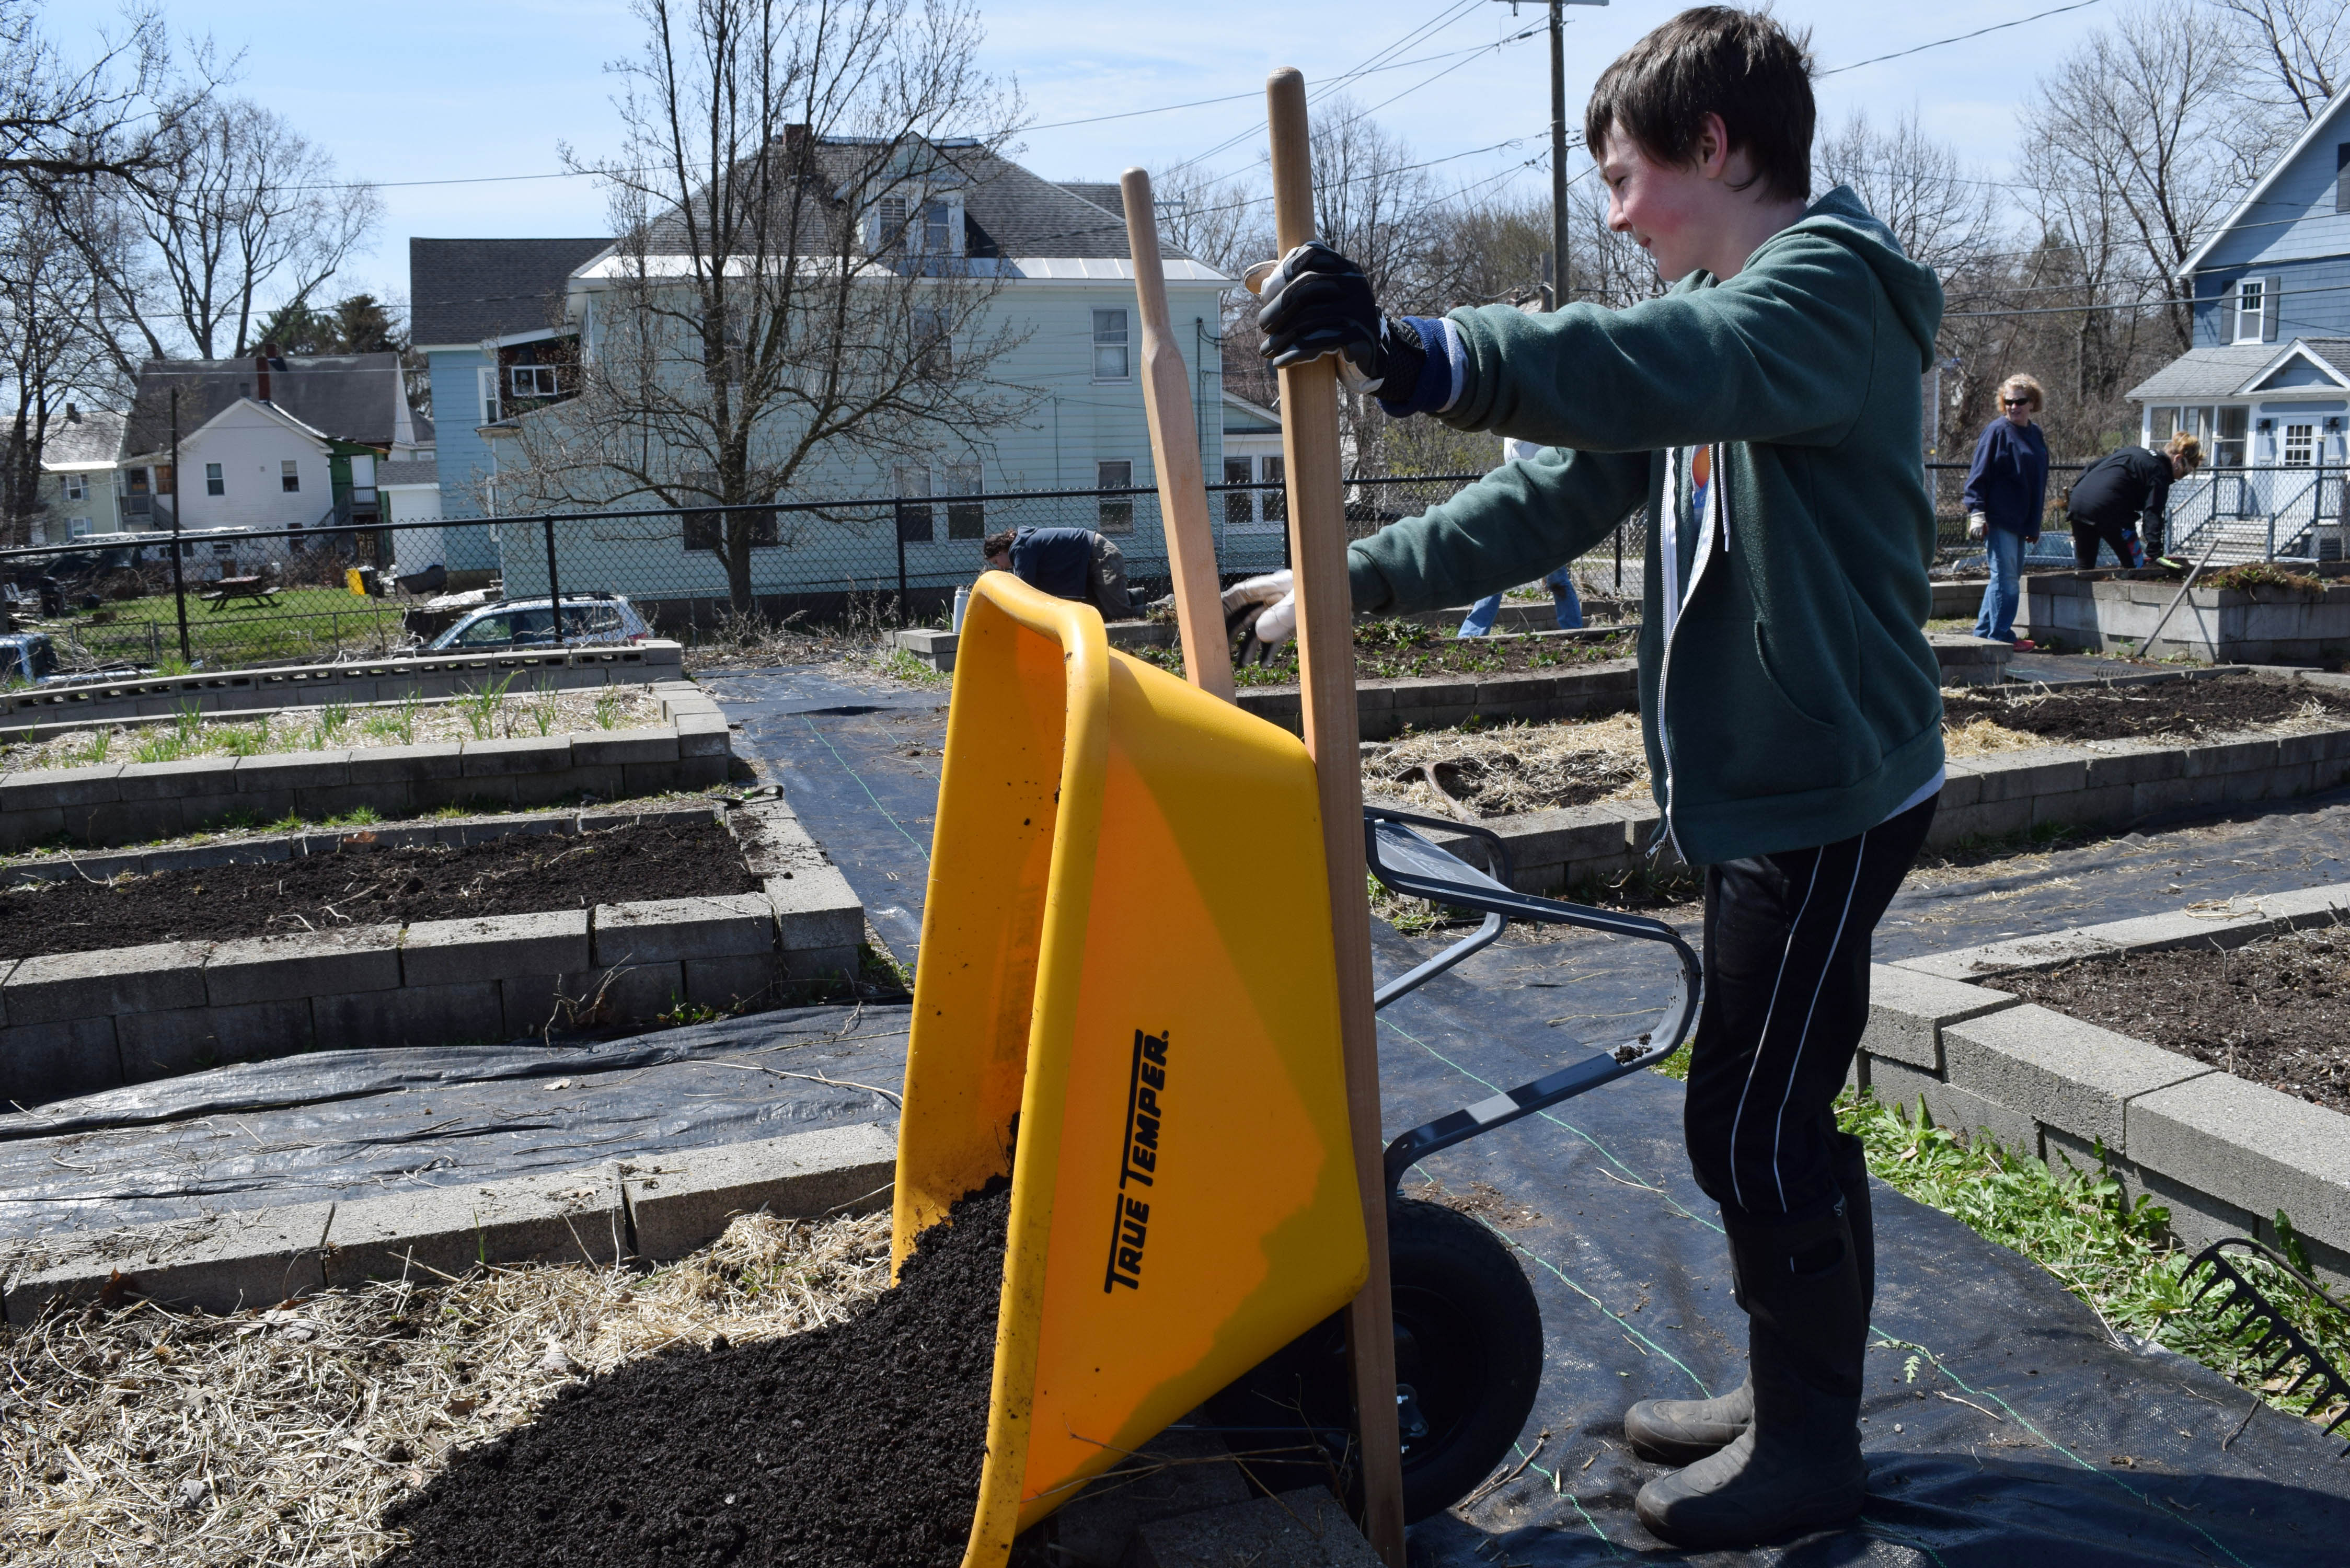 A young volunteer dumps mulch into a garden bed